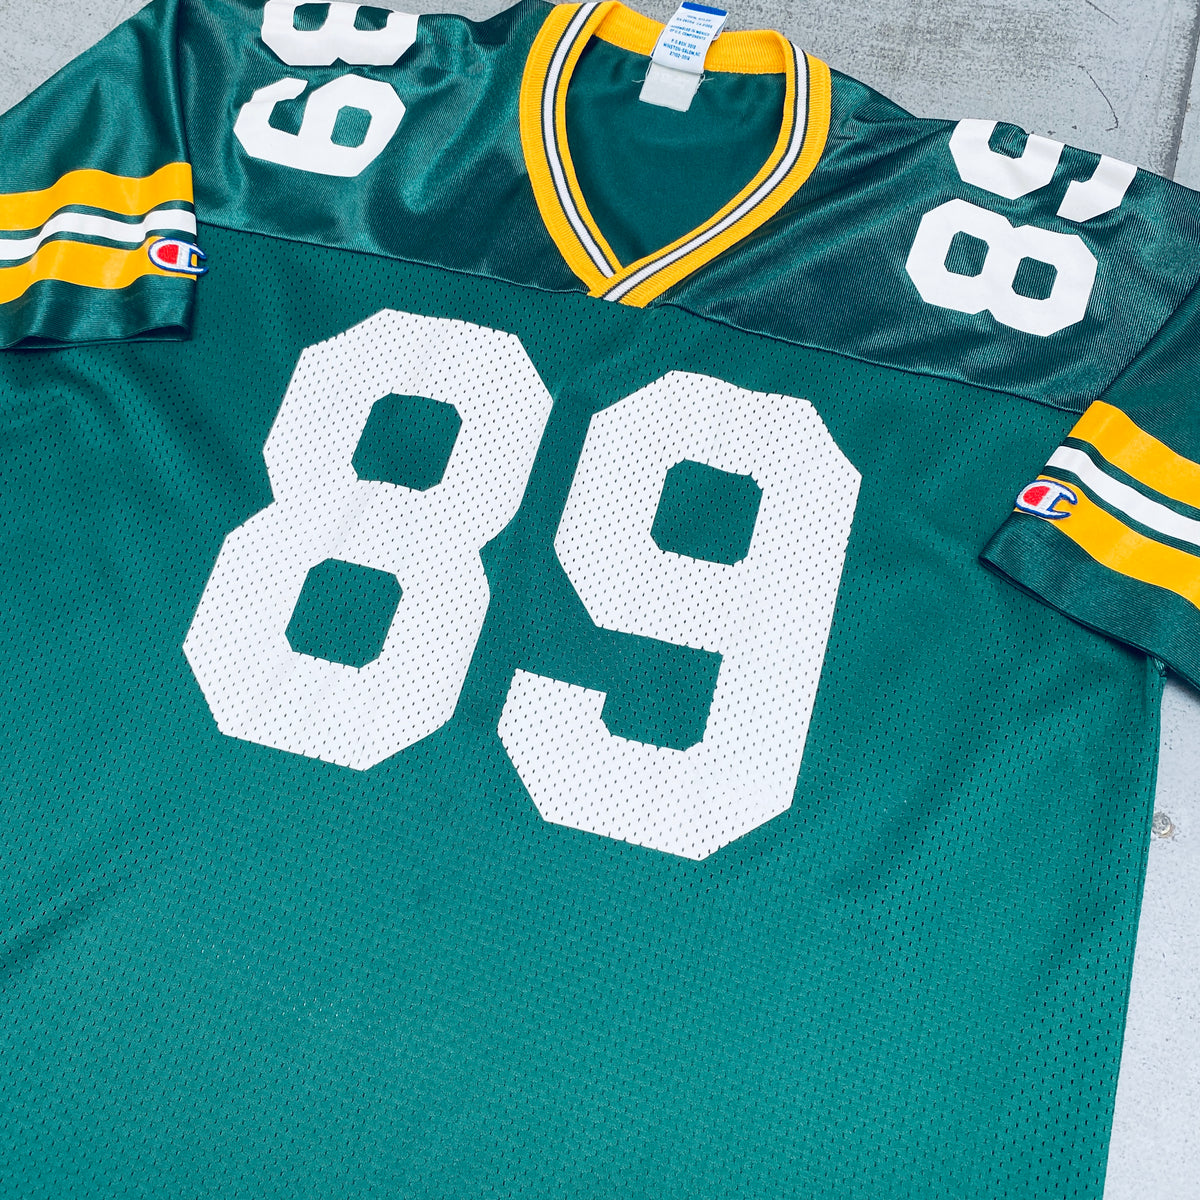 Green Bay Packers: No. 89 'Dave Robinson' Champion Jersey (XL